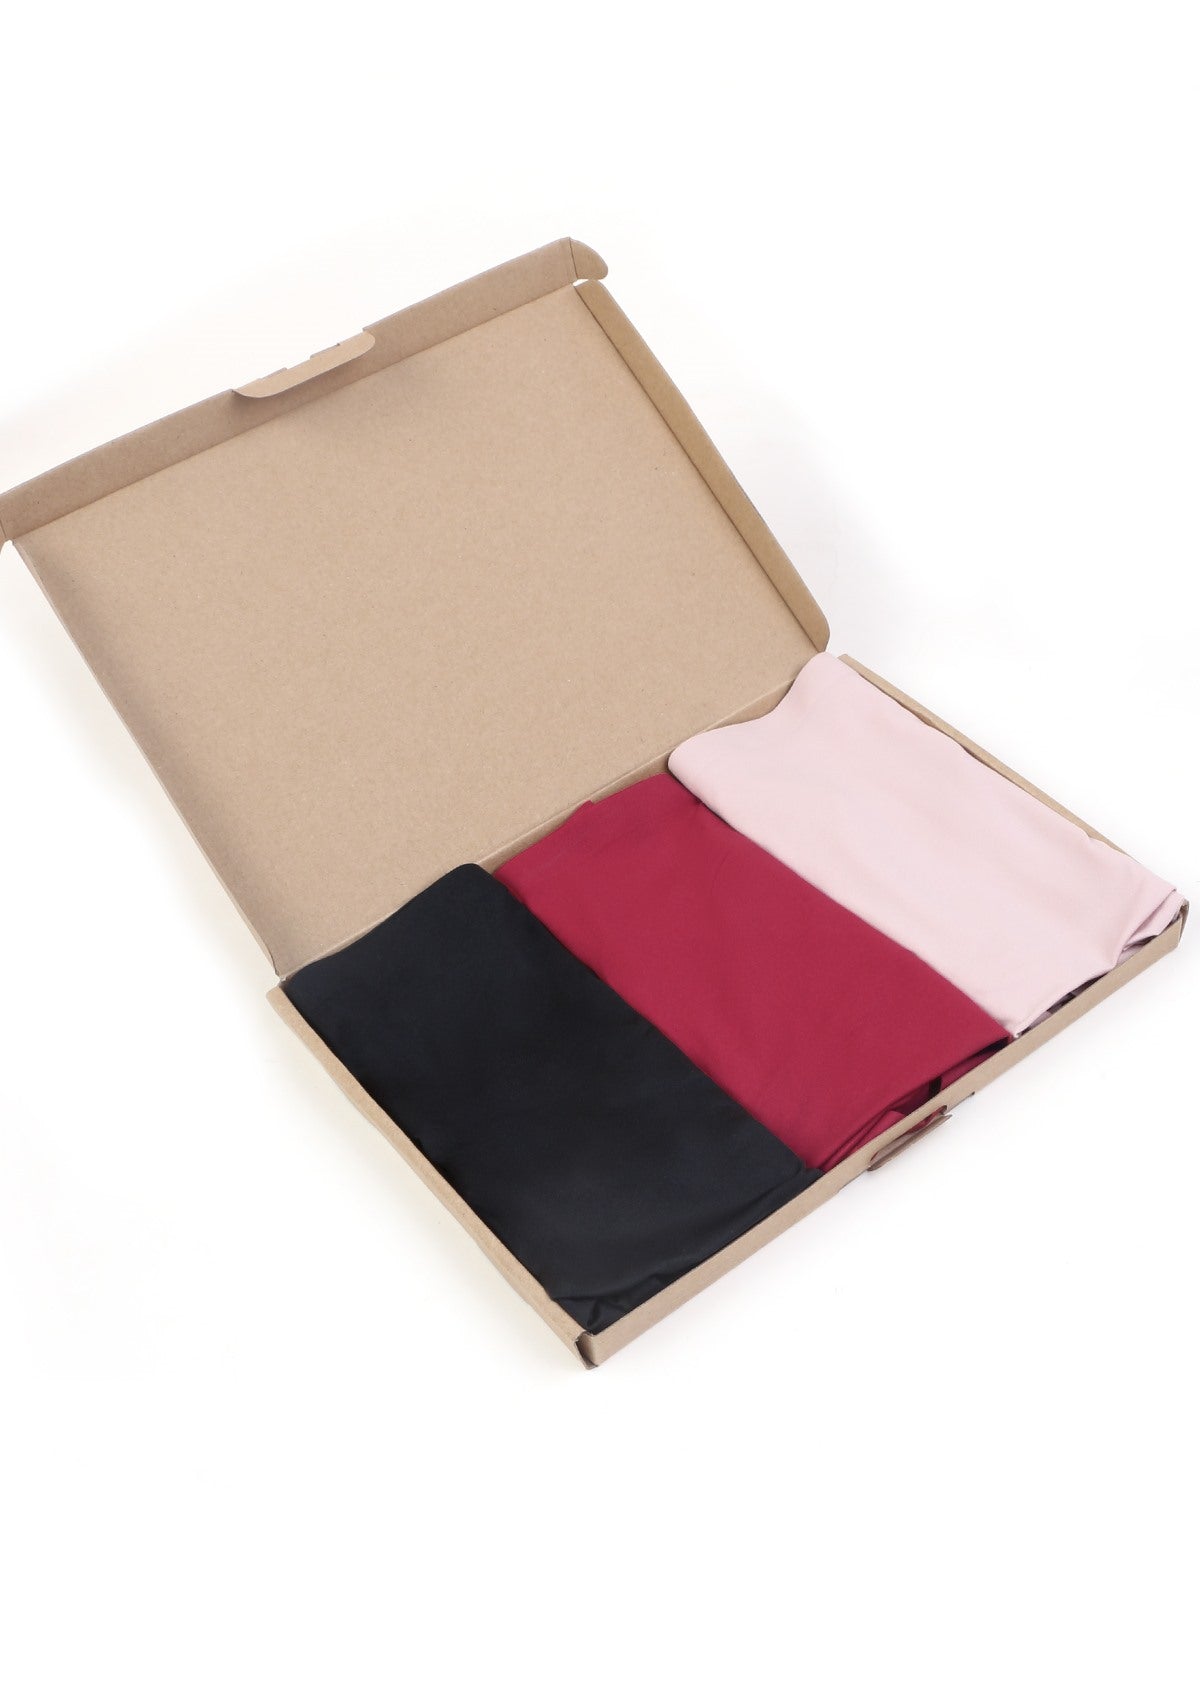 HSIA CoolFit Soft Stretch Seamless Brief Underwear Bundle - 10 Packs/$35 / ②(L-3XL) / 2*Peach Beige+2*Red+Dusty Rose